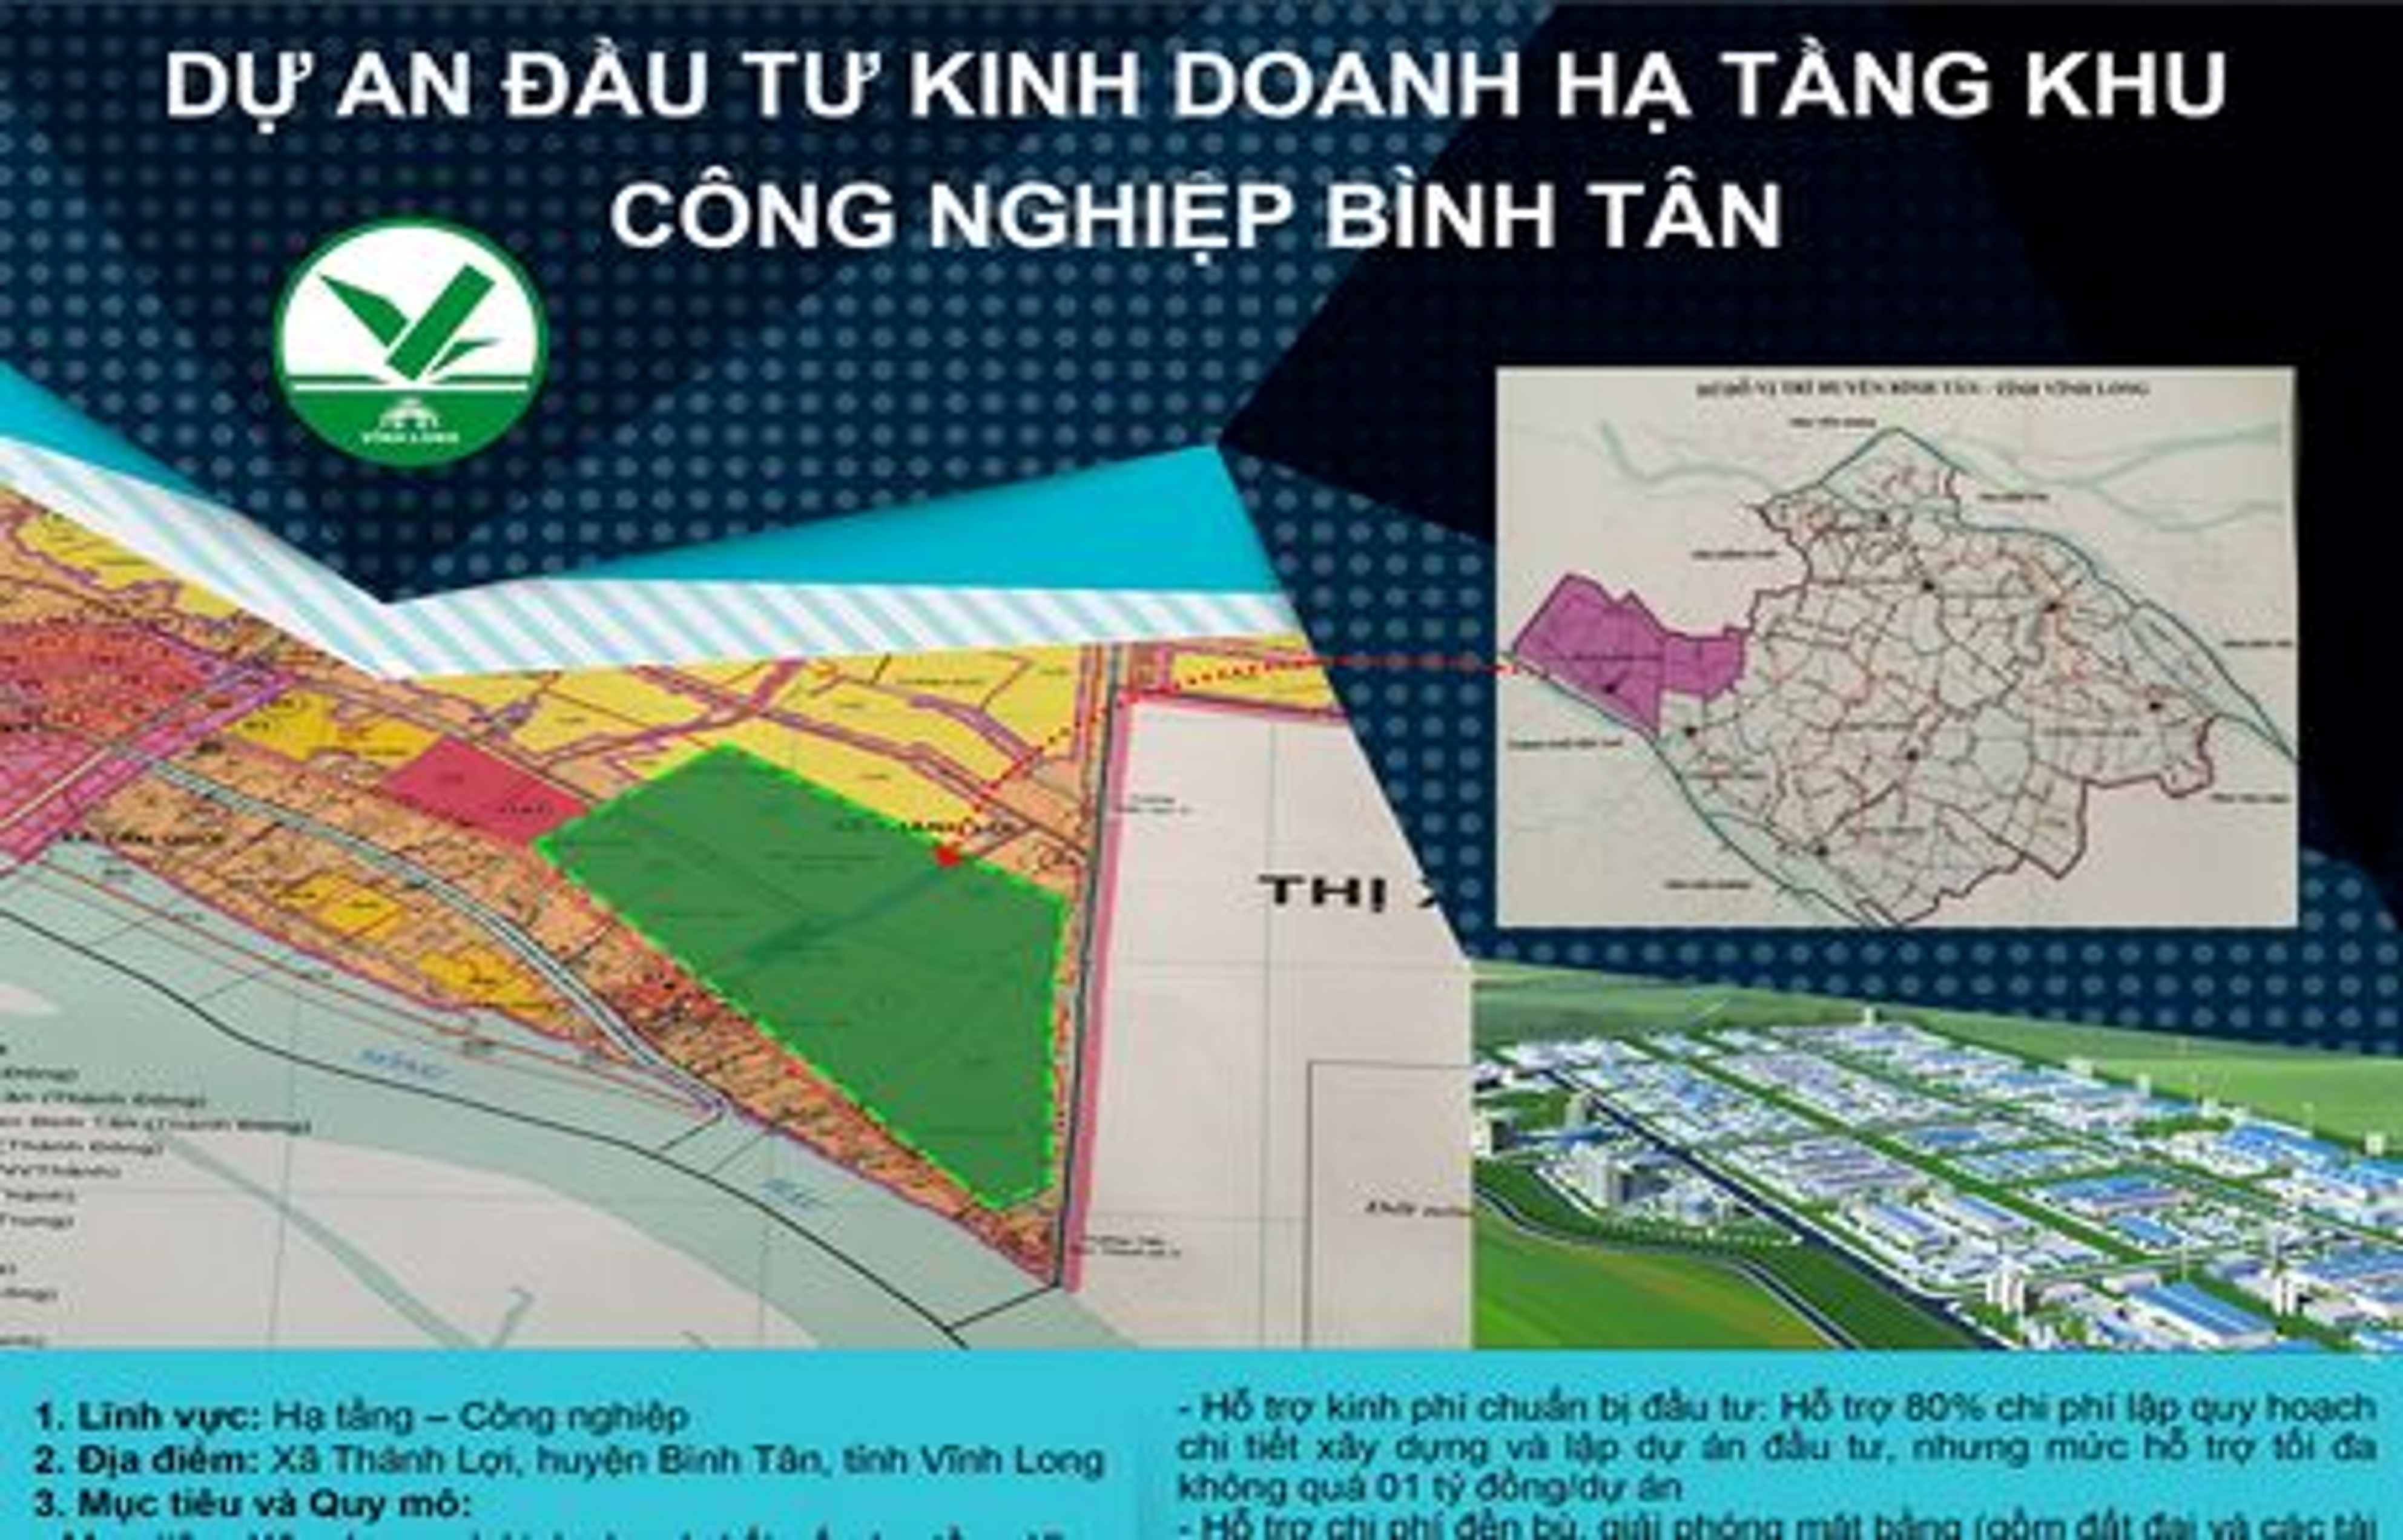 Binh Tan Industrial Park